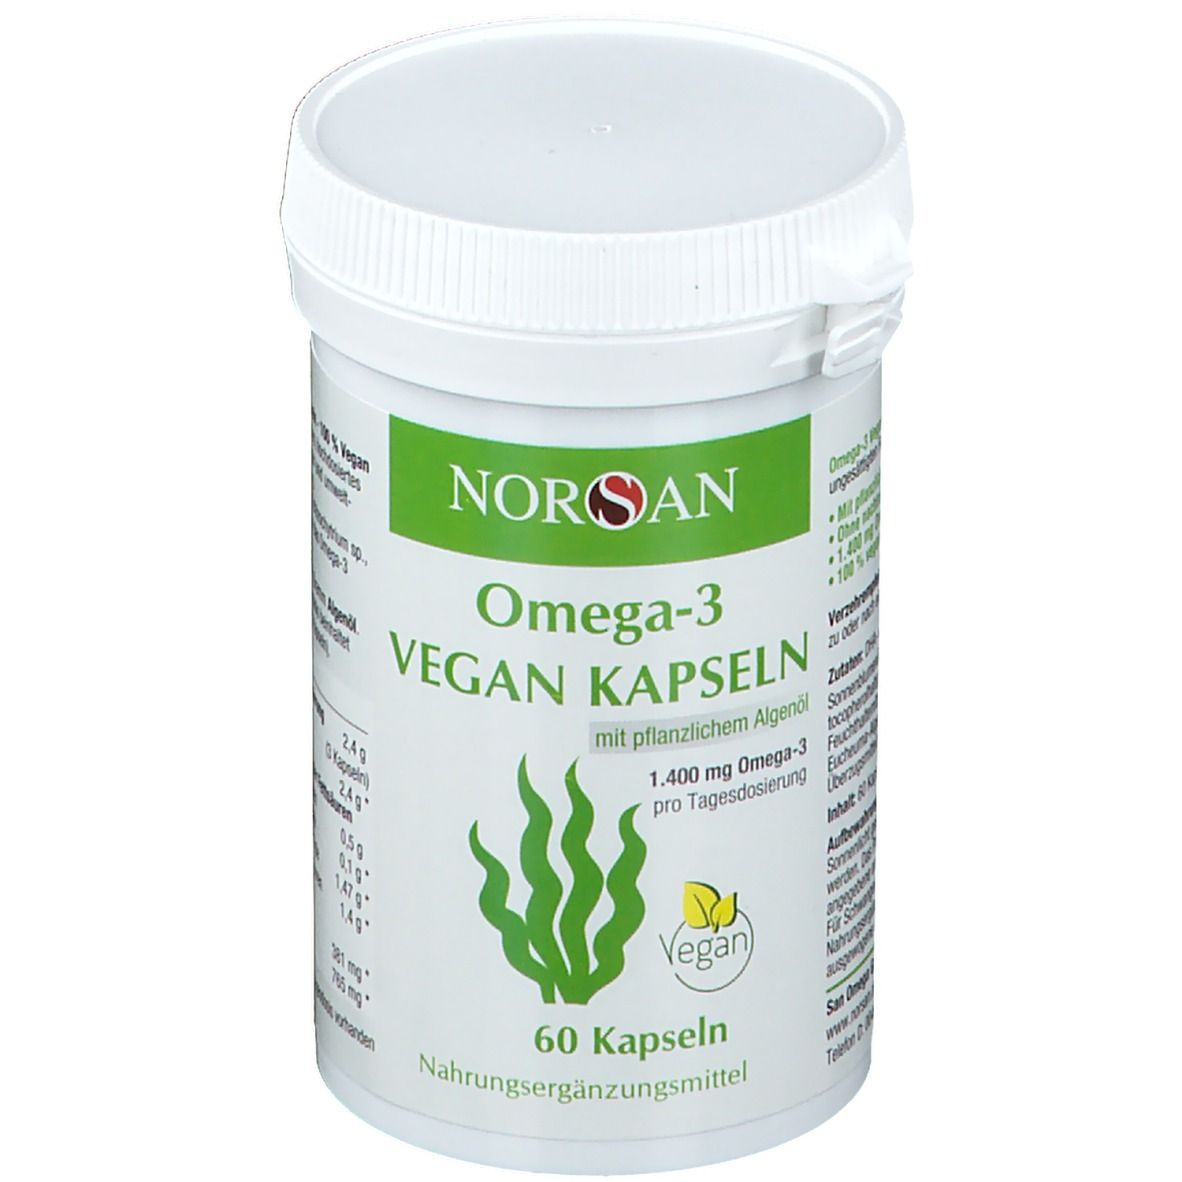 NORSAN Omega-3 Vegan Kapseln